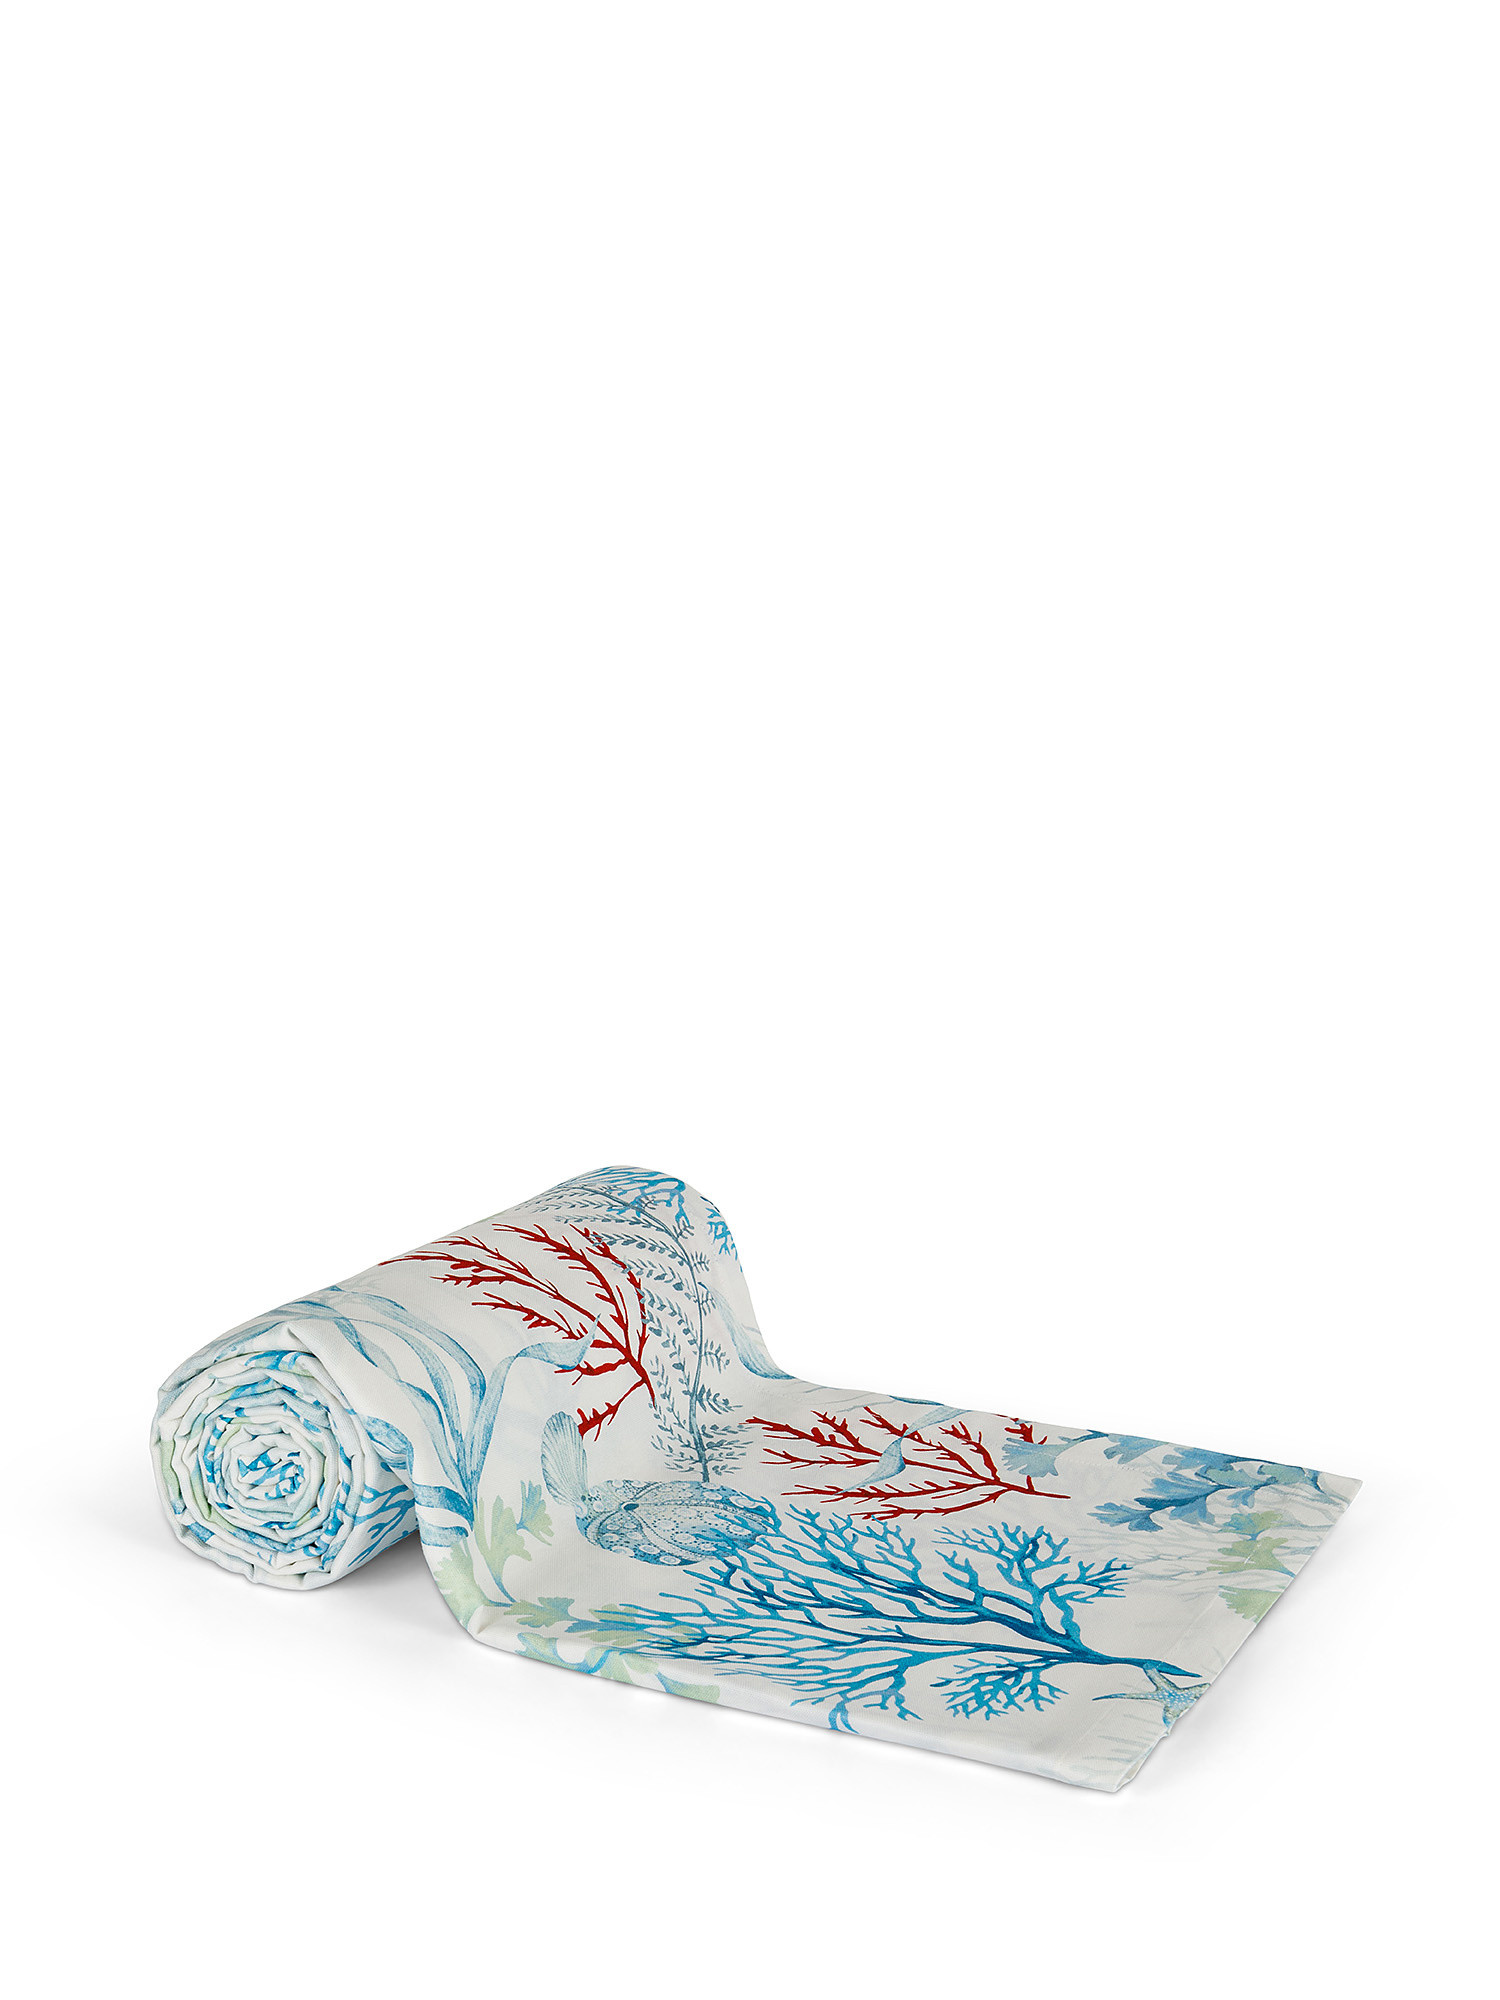 Furnishing towel in marine print cotton, White, large image number 0